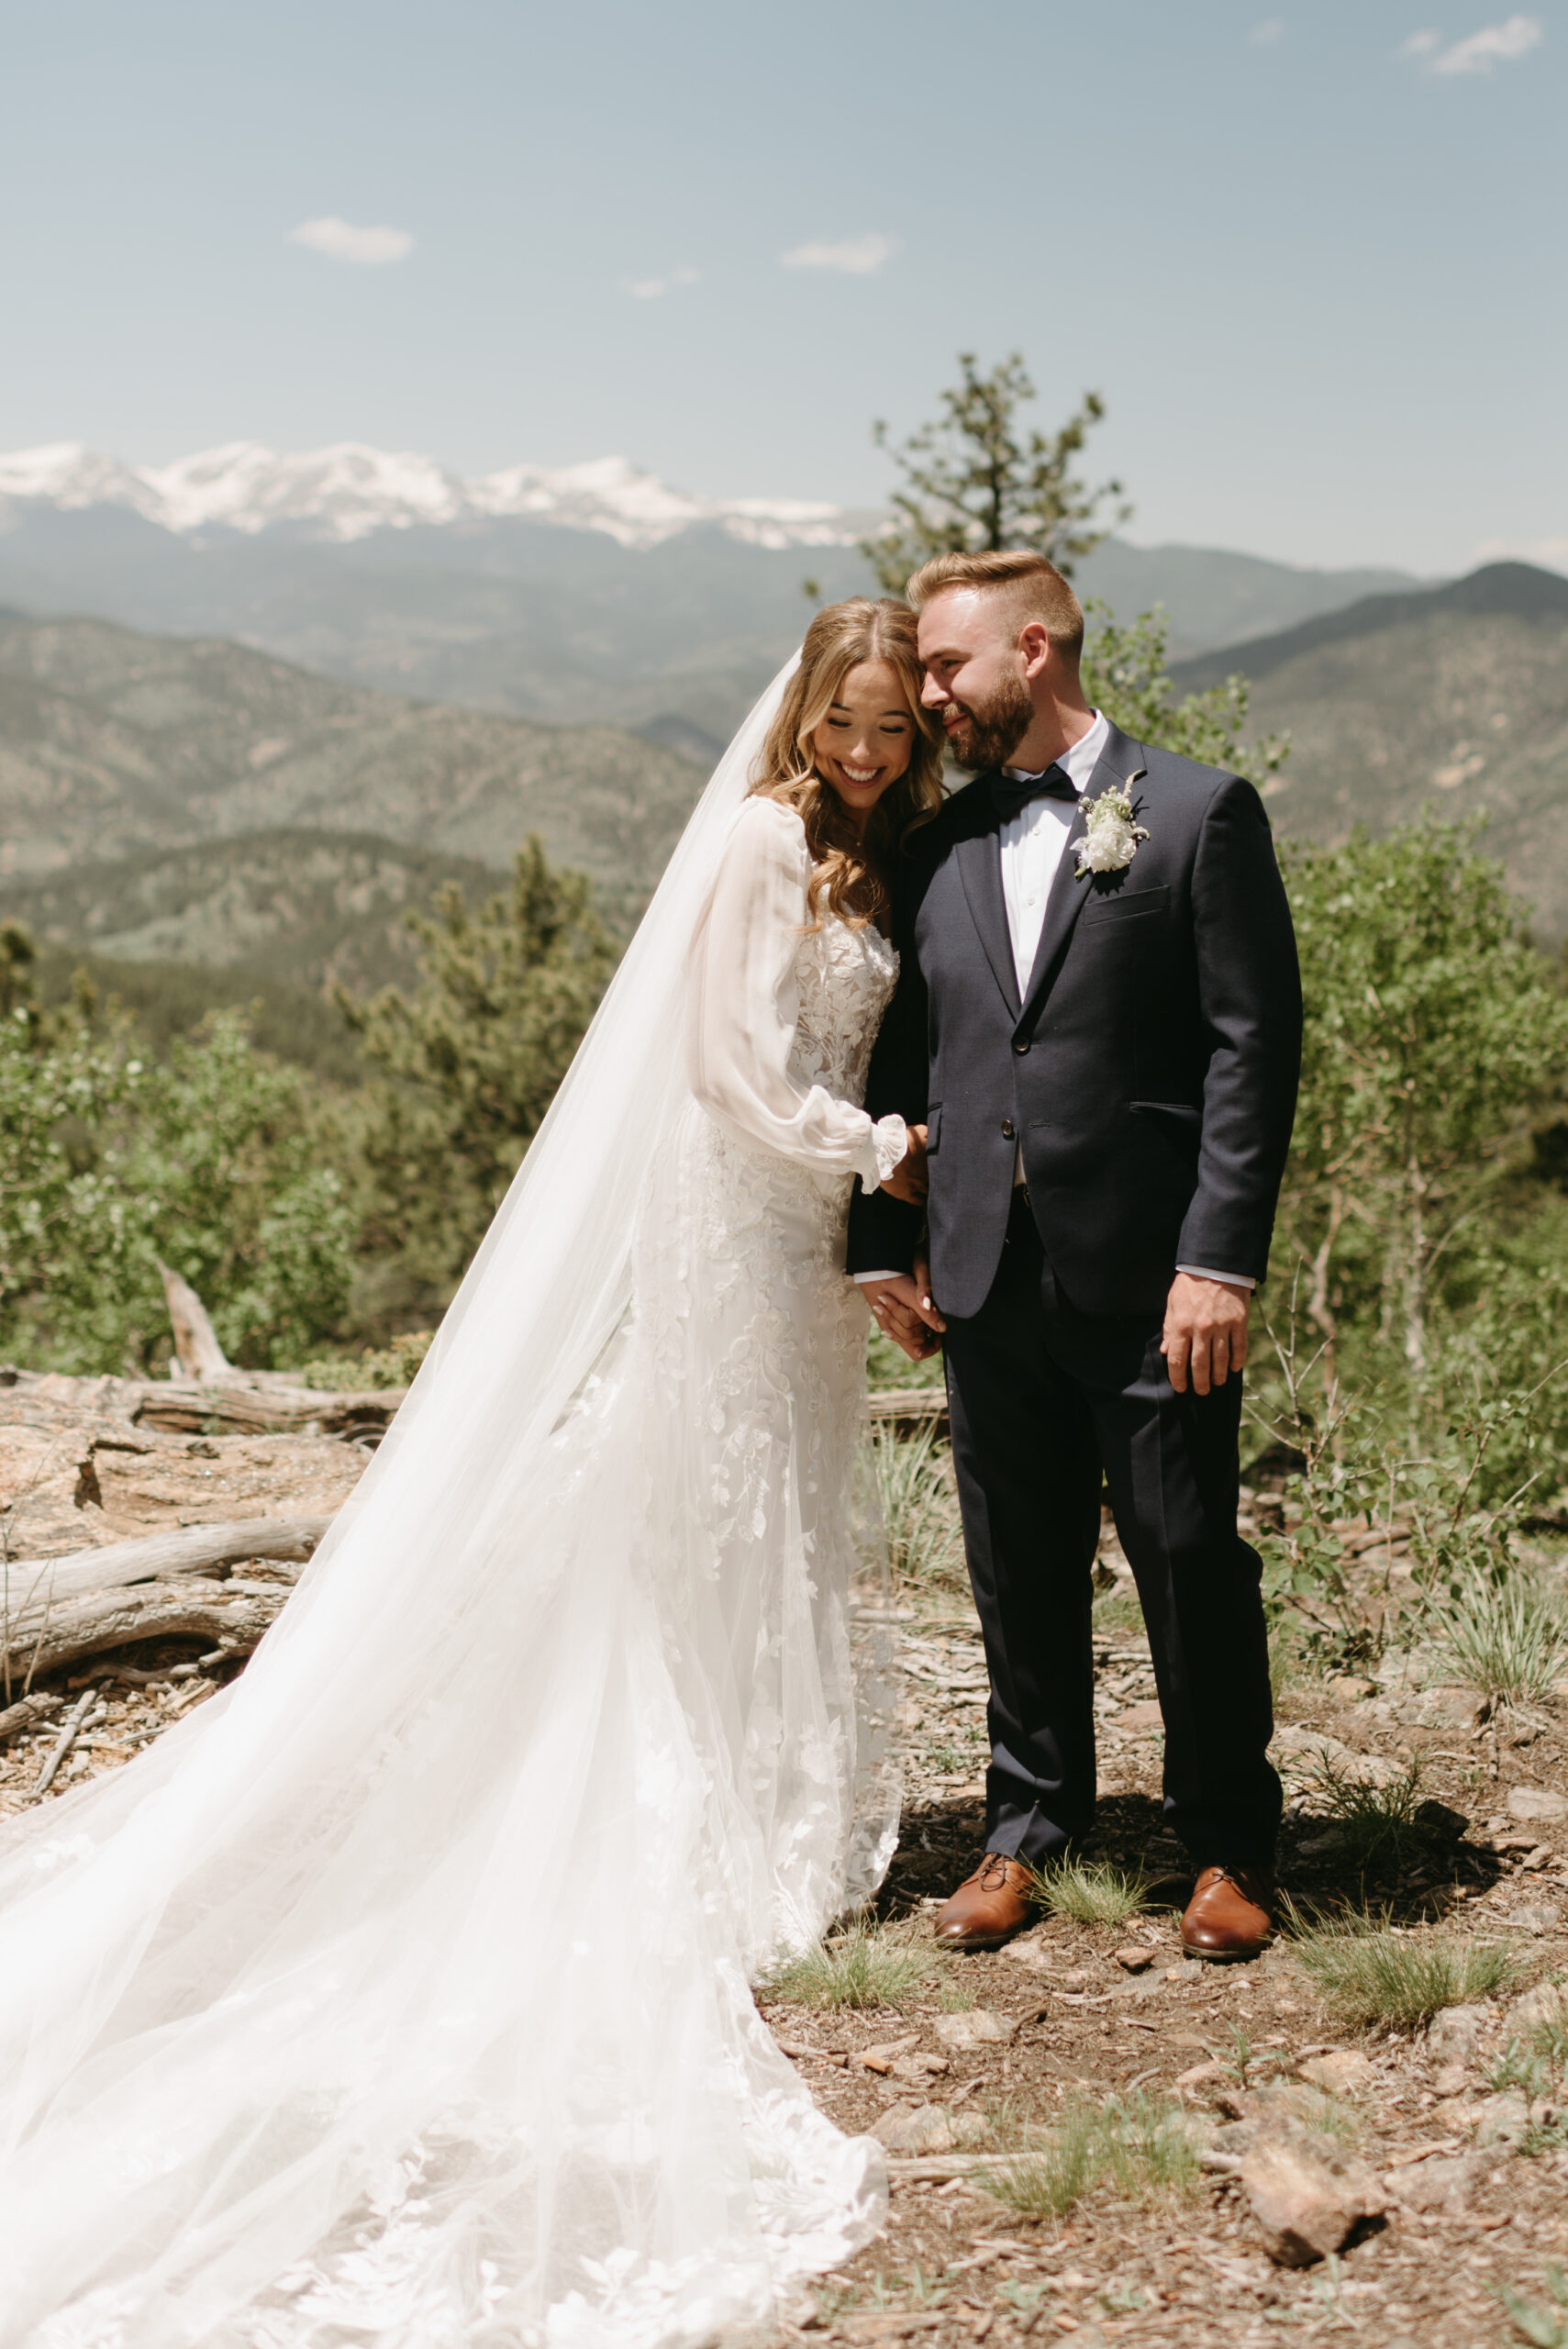 A intimate mountainside wedding in Colorado.